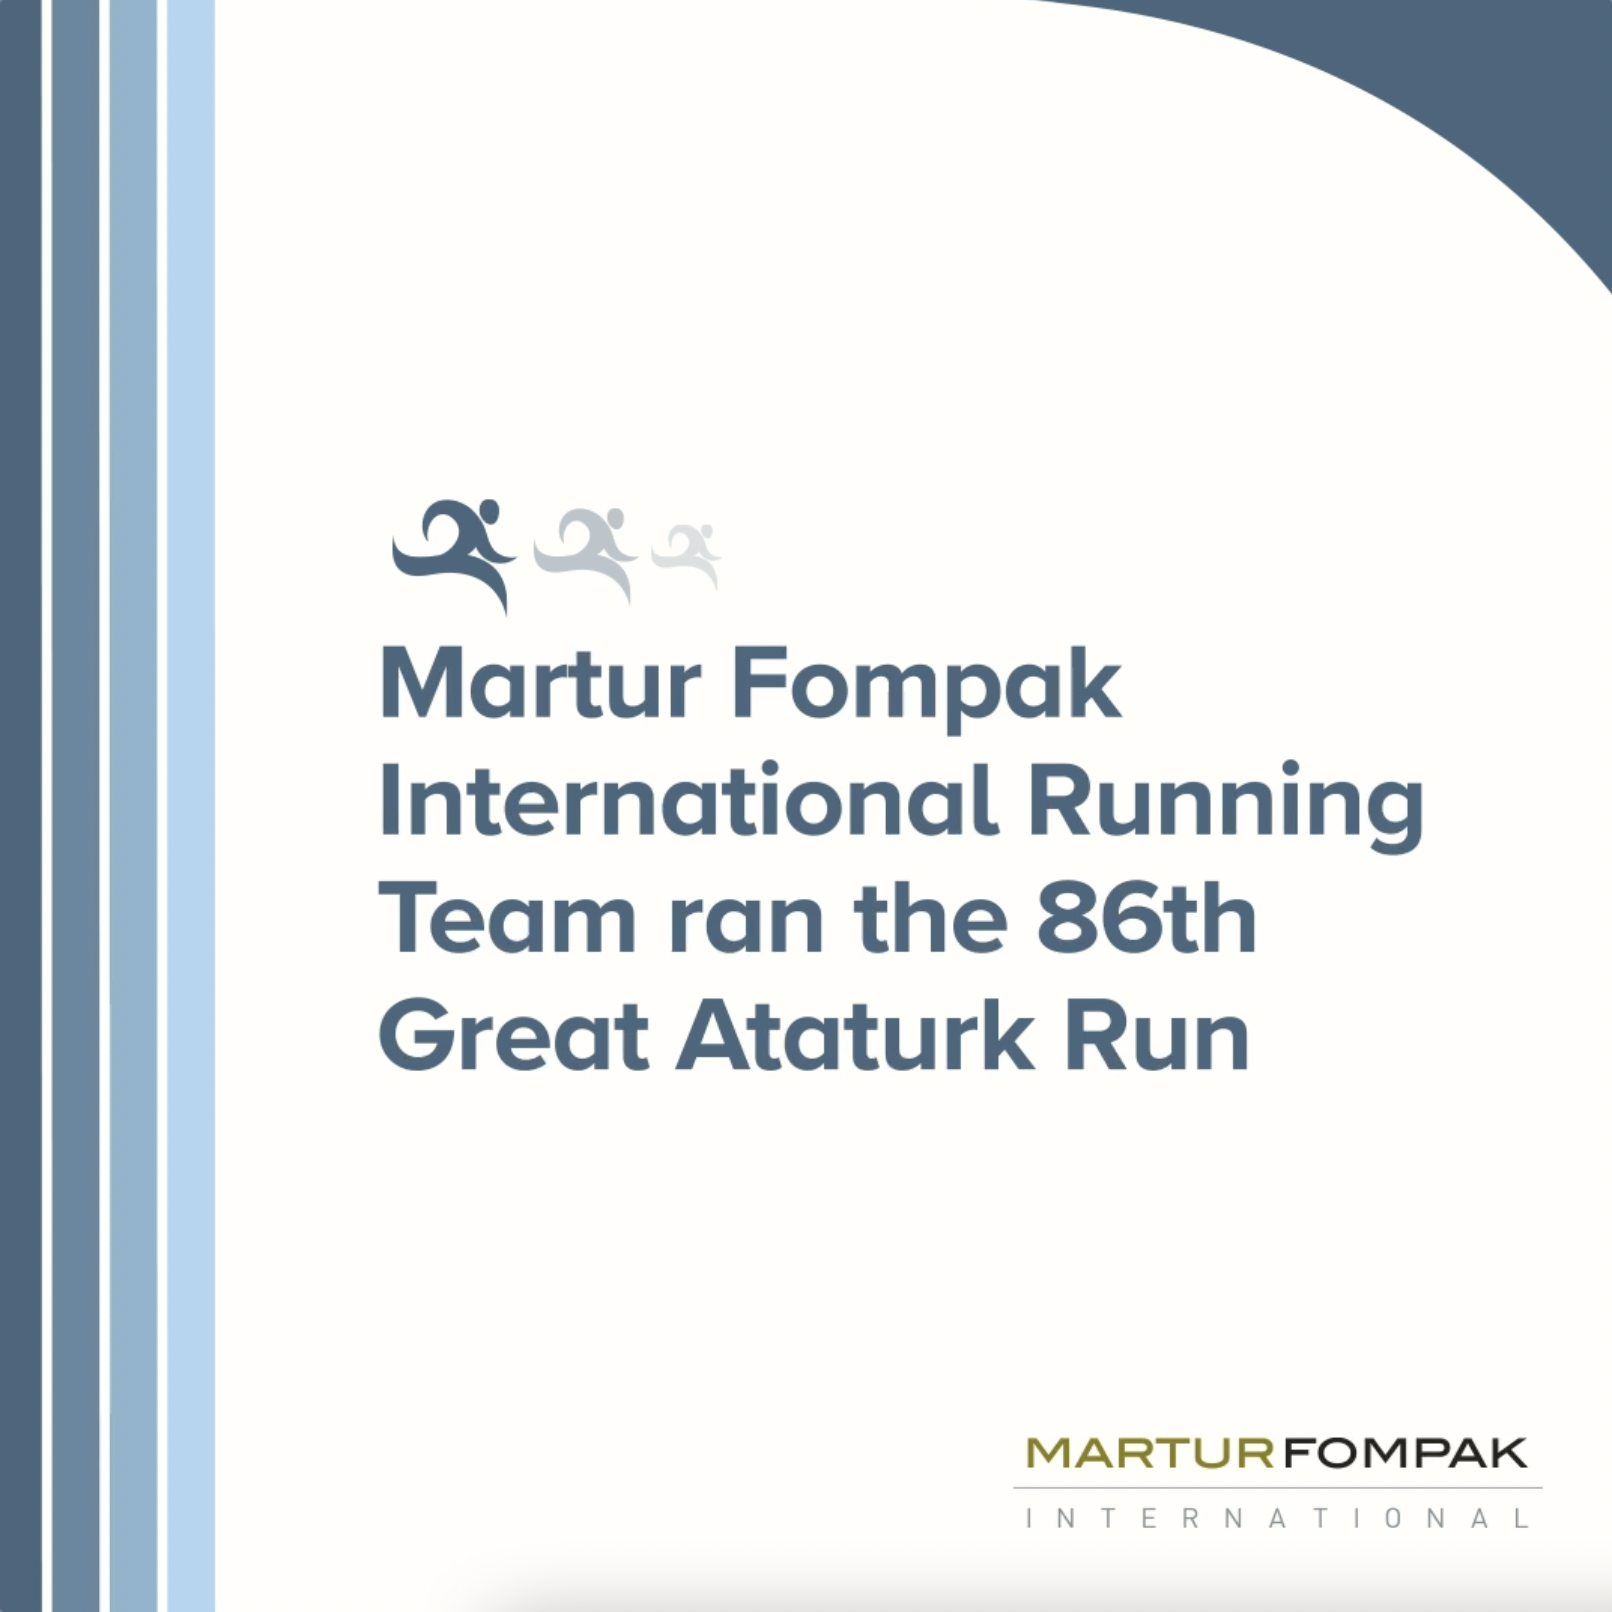 The 86th Great Atatürk Run